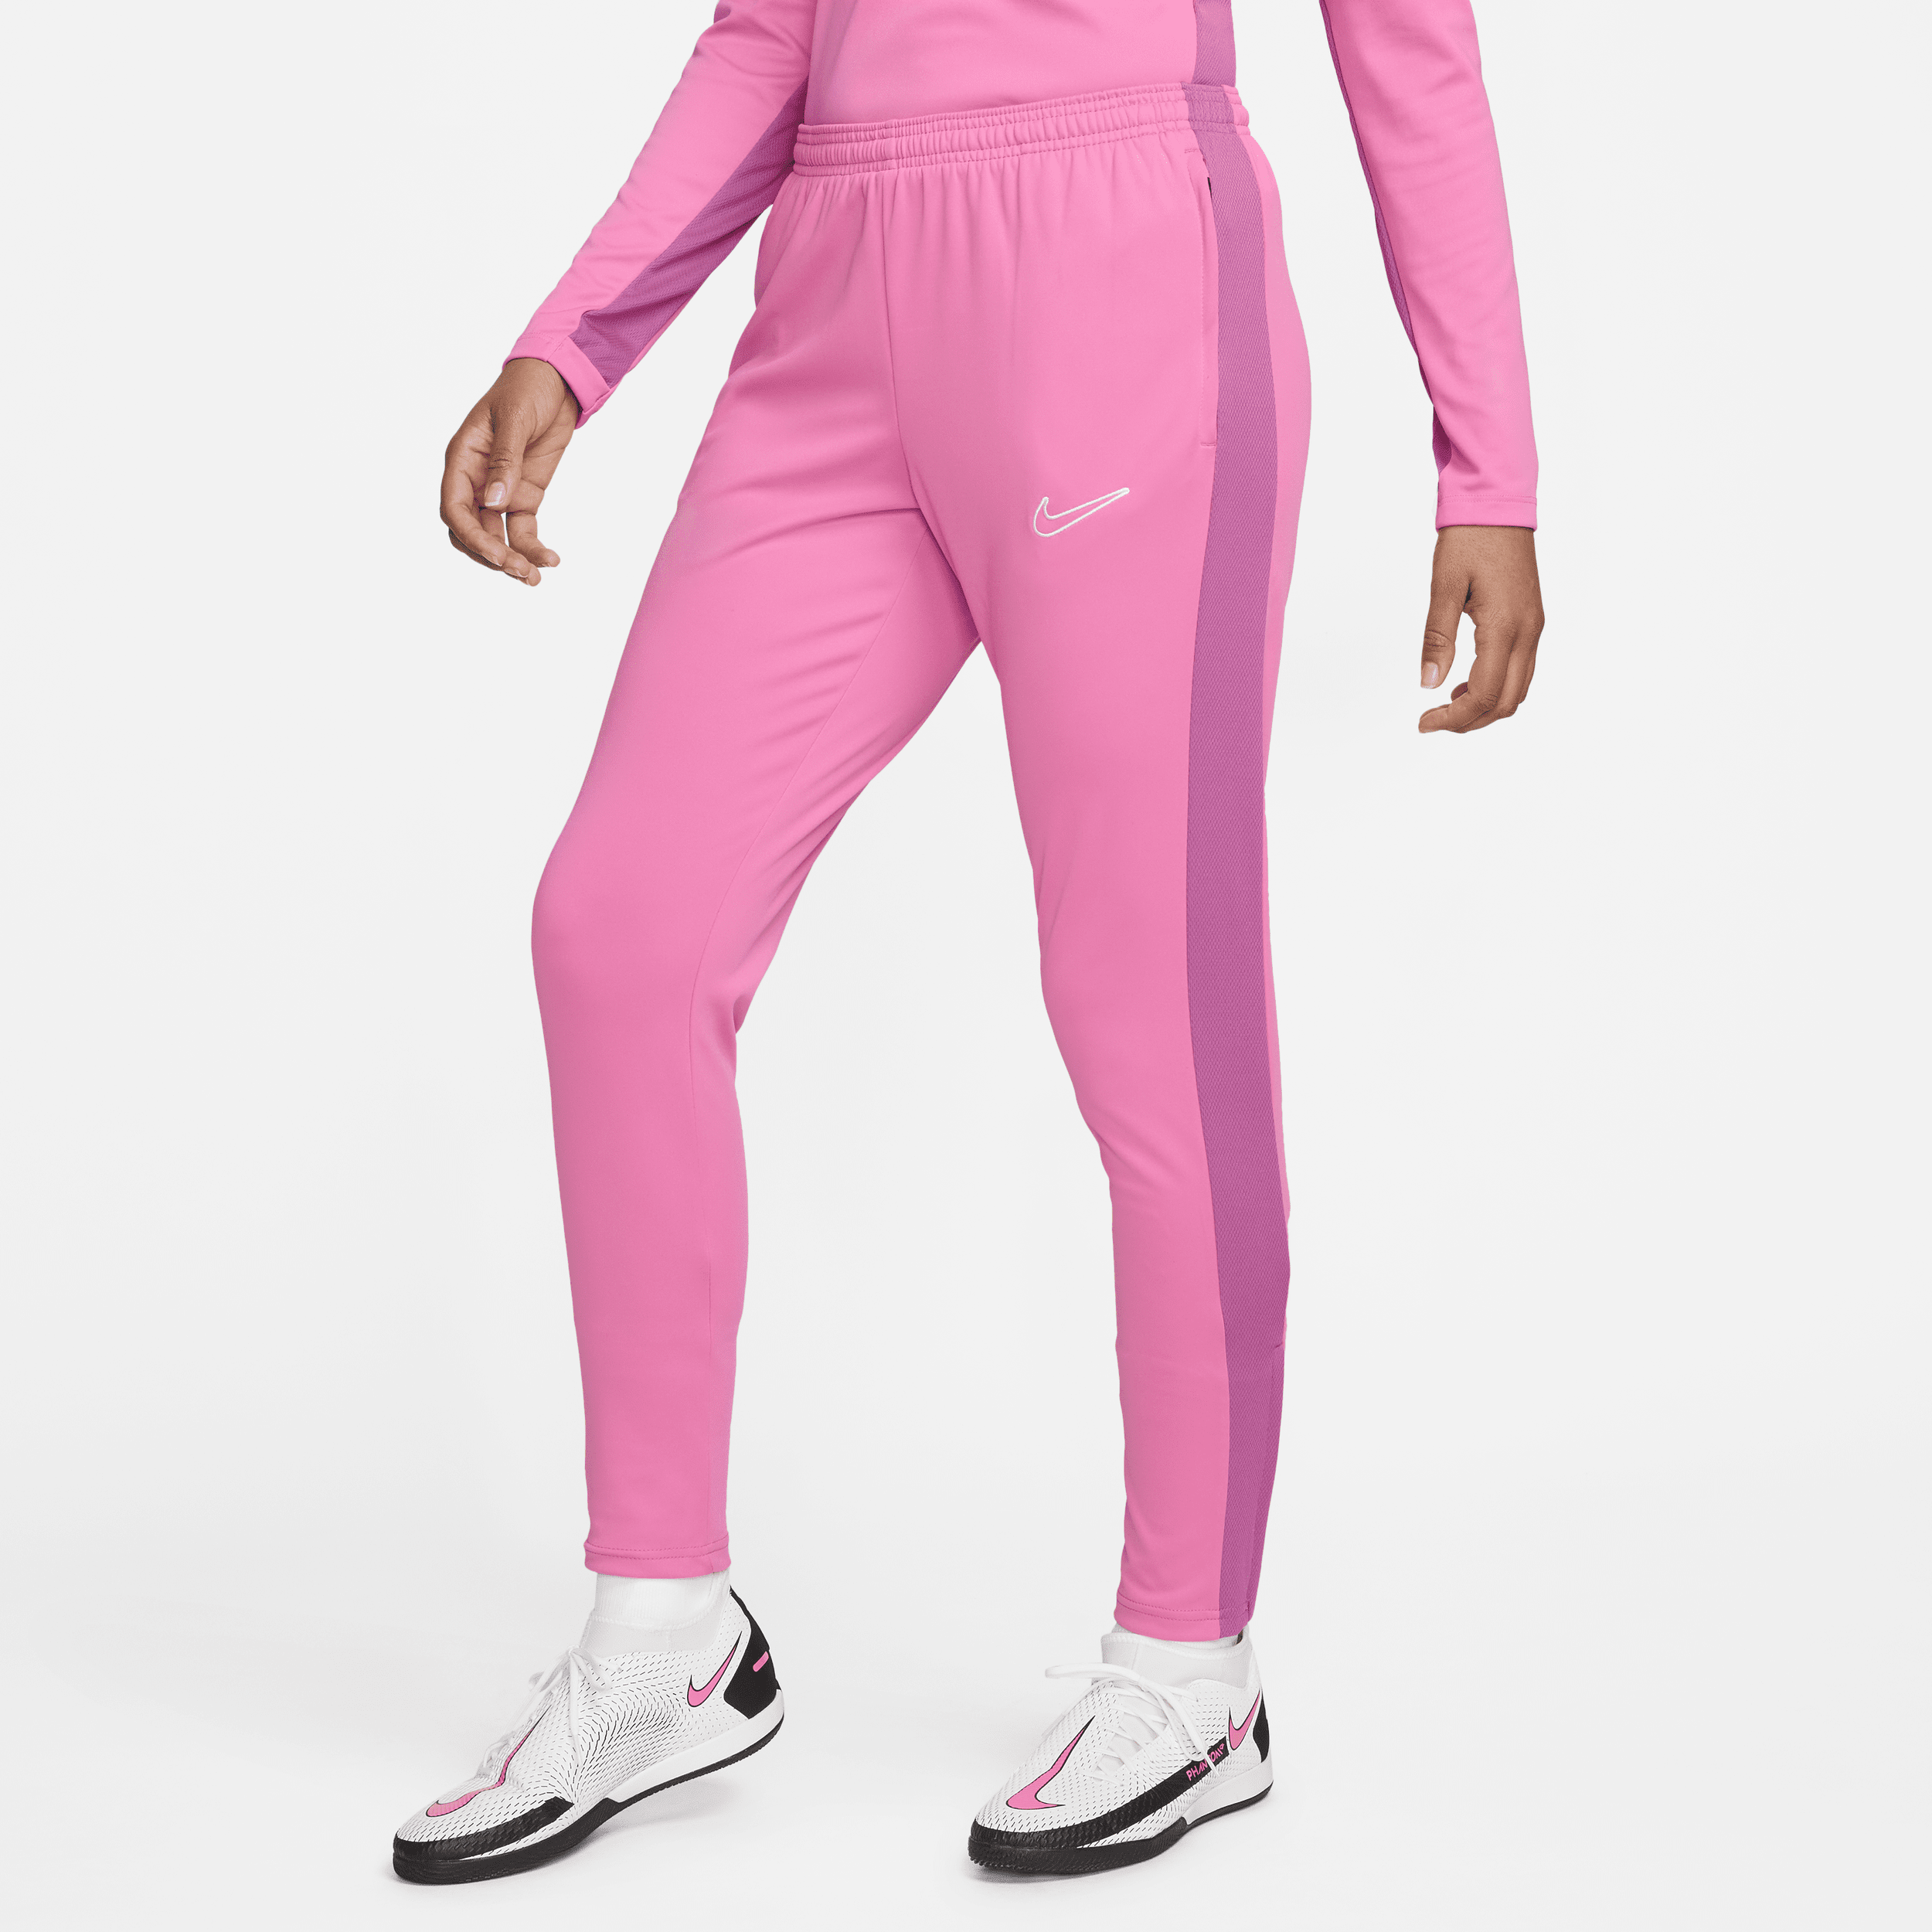 Nike Women's Dri-fit Academy Soccer Pants In Pink